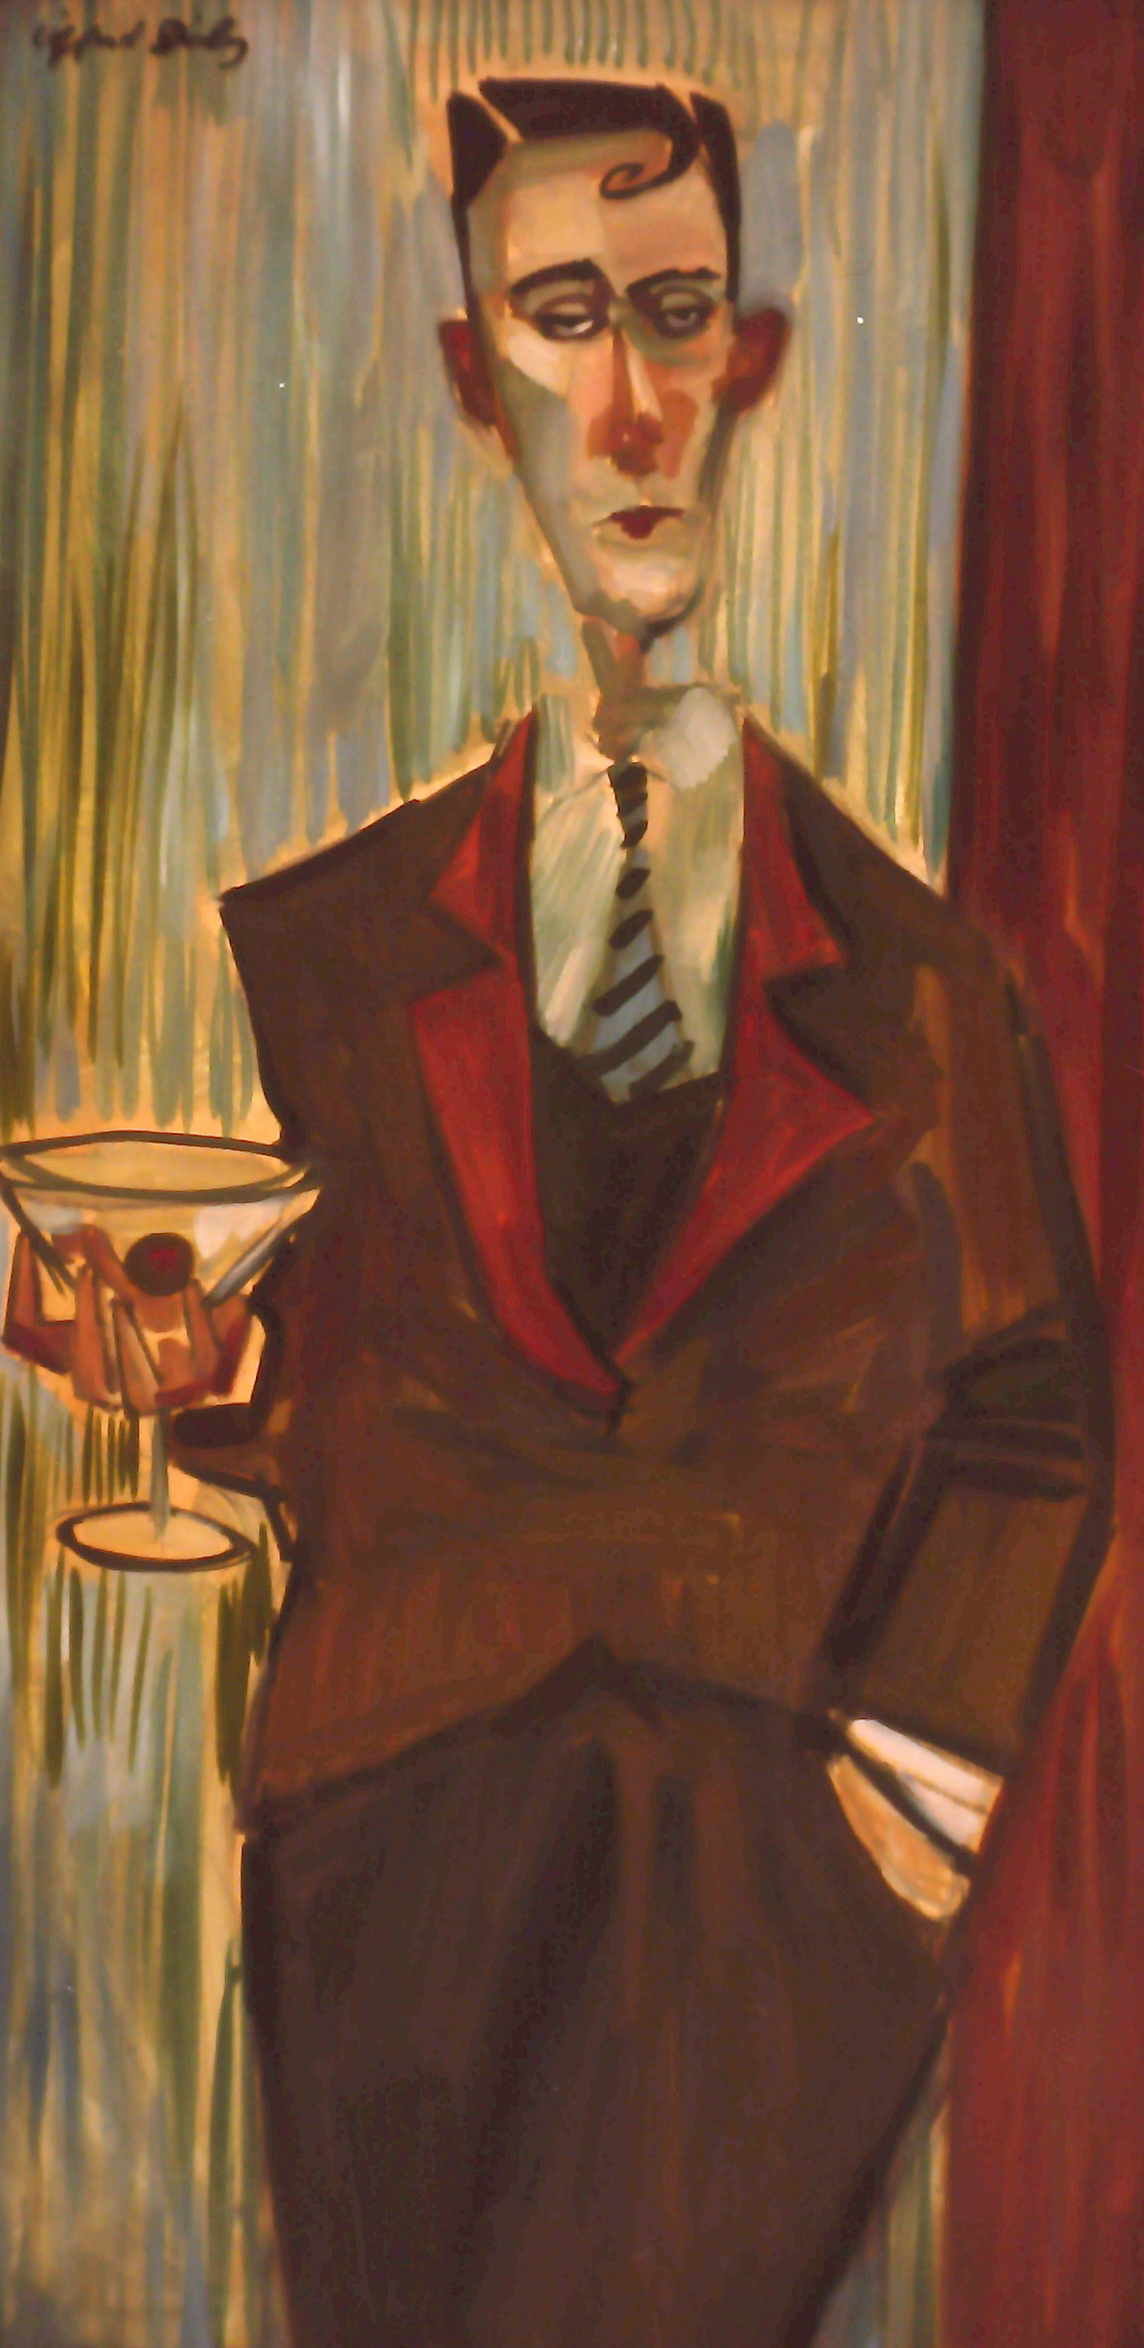 "Martini Man" by Clifford Bailey Fine Art